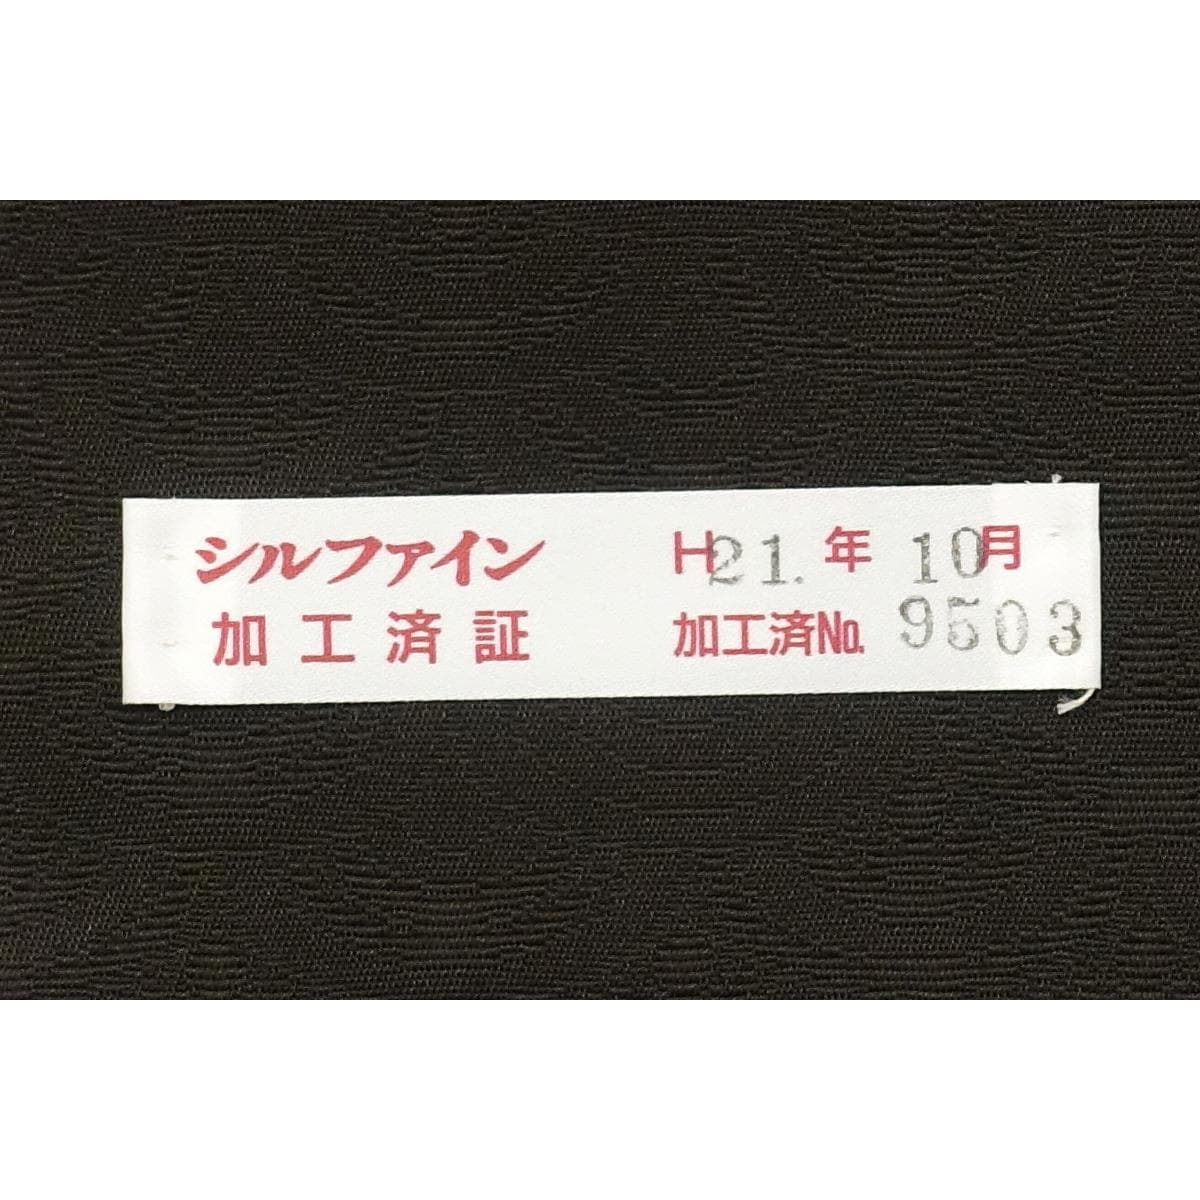 [Unused items] Fukuro obi 2-way obi